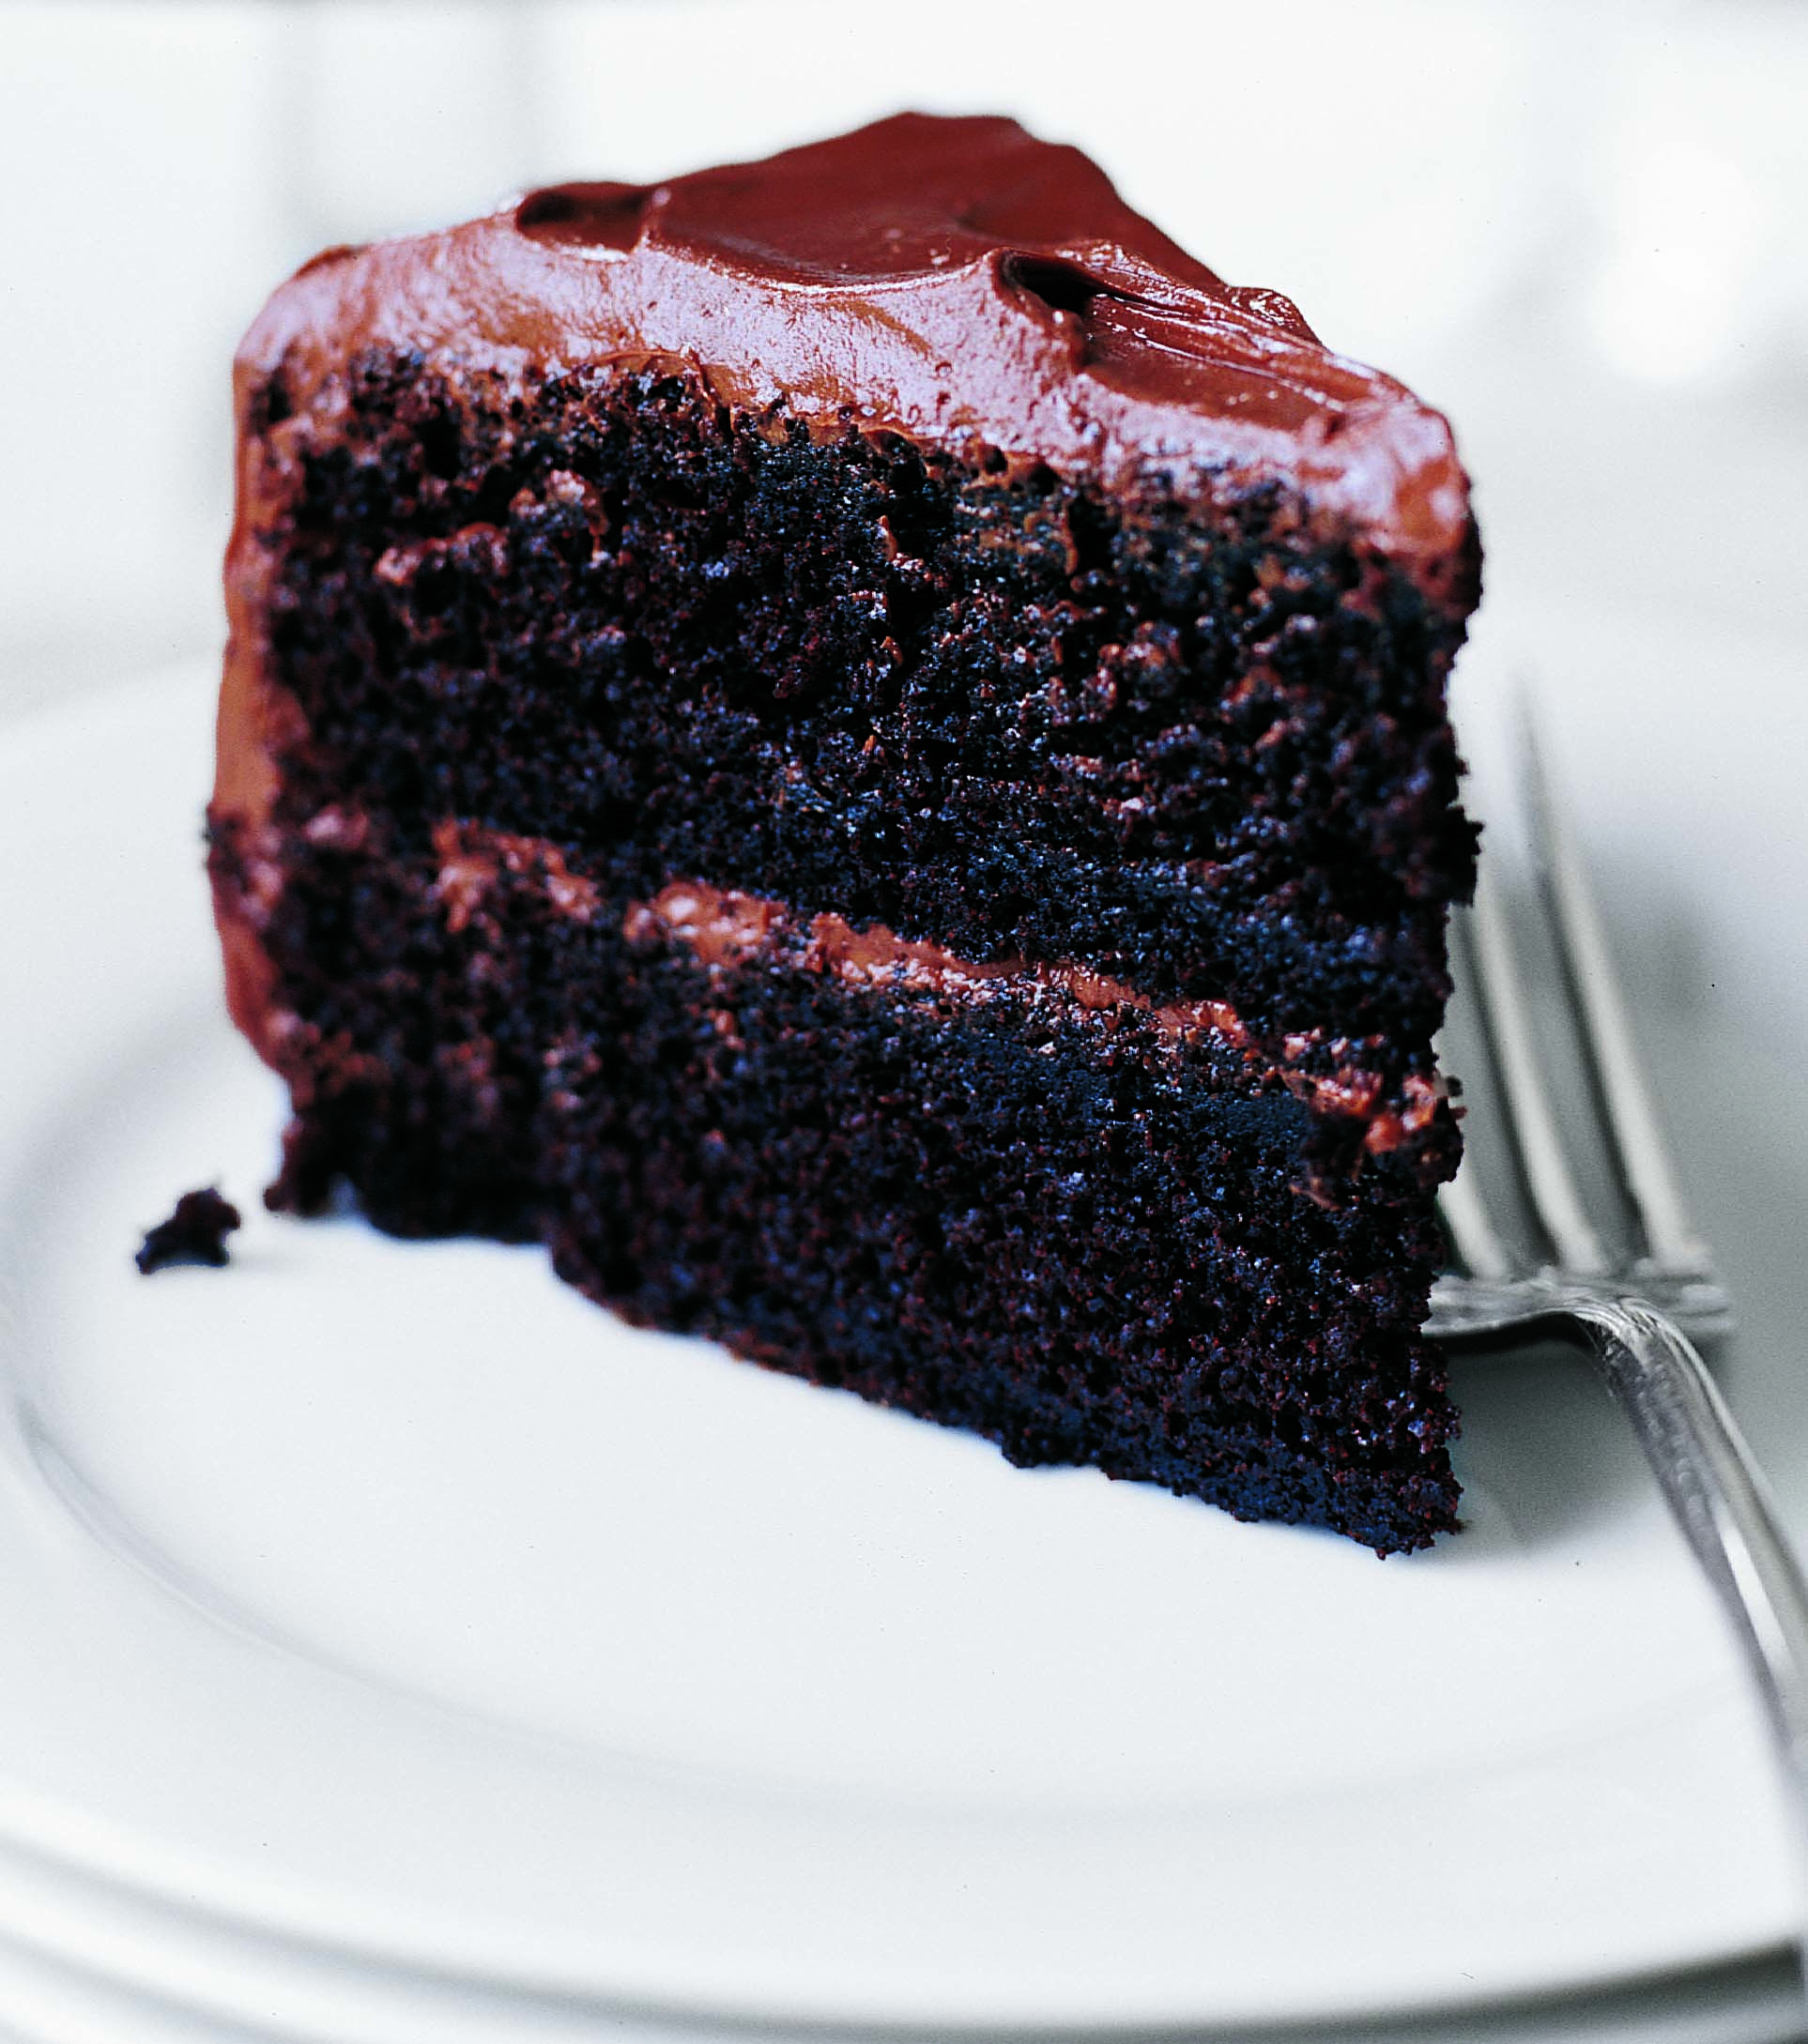 Chocolate Cake Ina Garten
 Best 25 Ina garten chocolate cake ideas on Pinterest